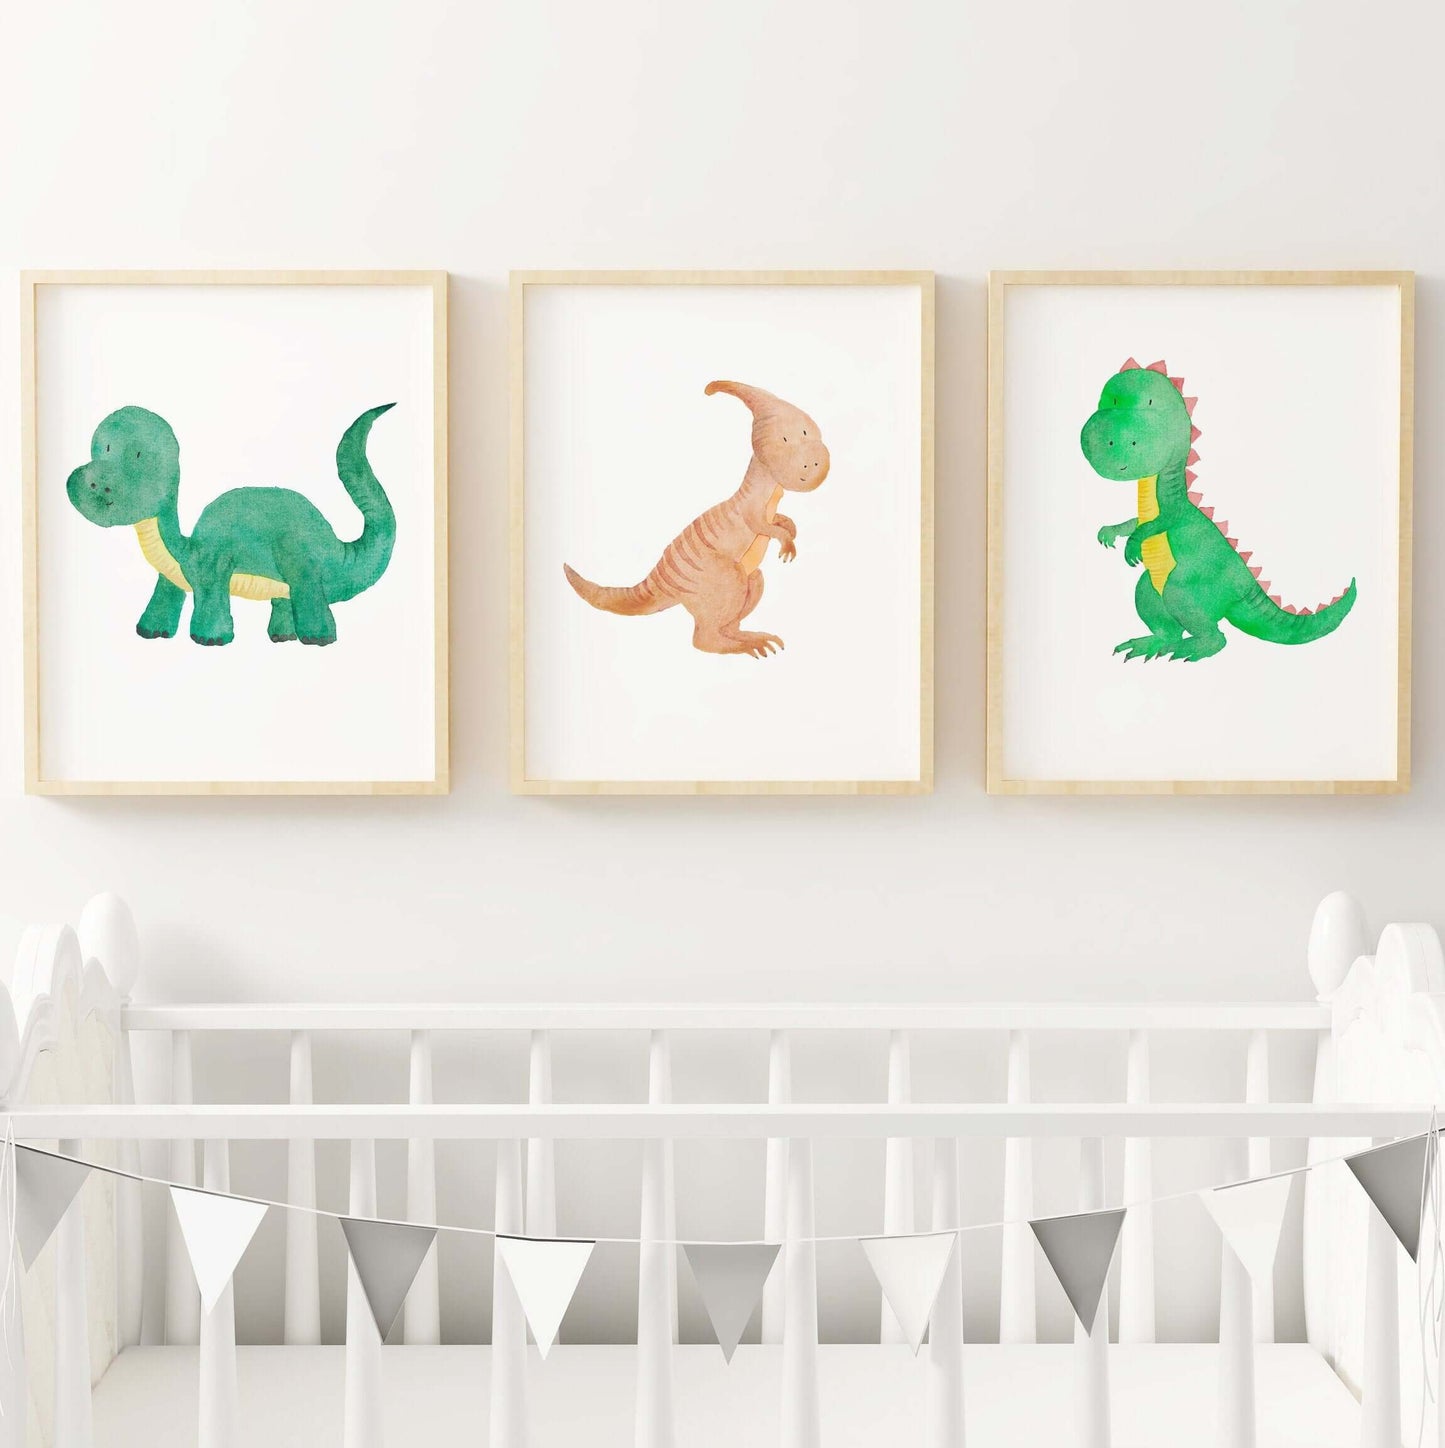 Nursery Wall Art, Nursery Decor, Watercolour Prints, Dinosaur Wall Art, Dinosaur Bedroom Prints, Children's Wall Art, Nursery Prints